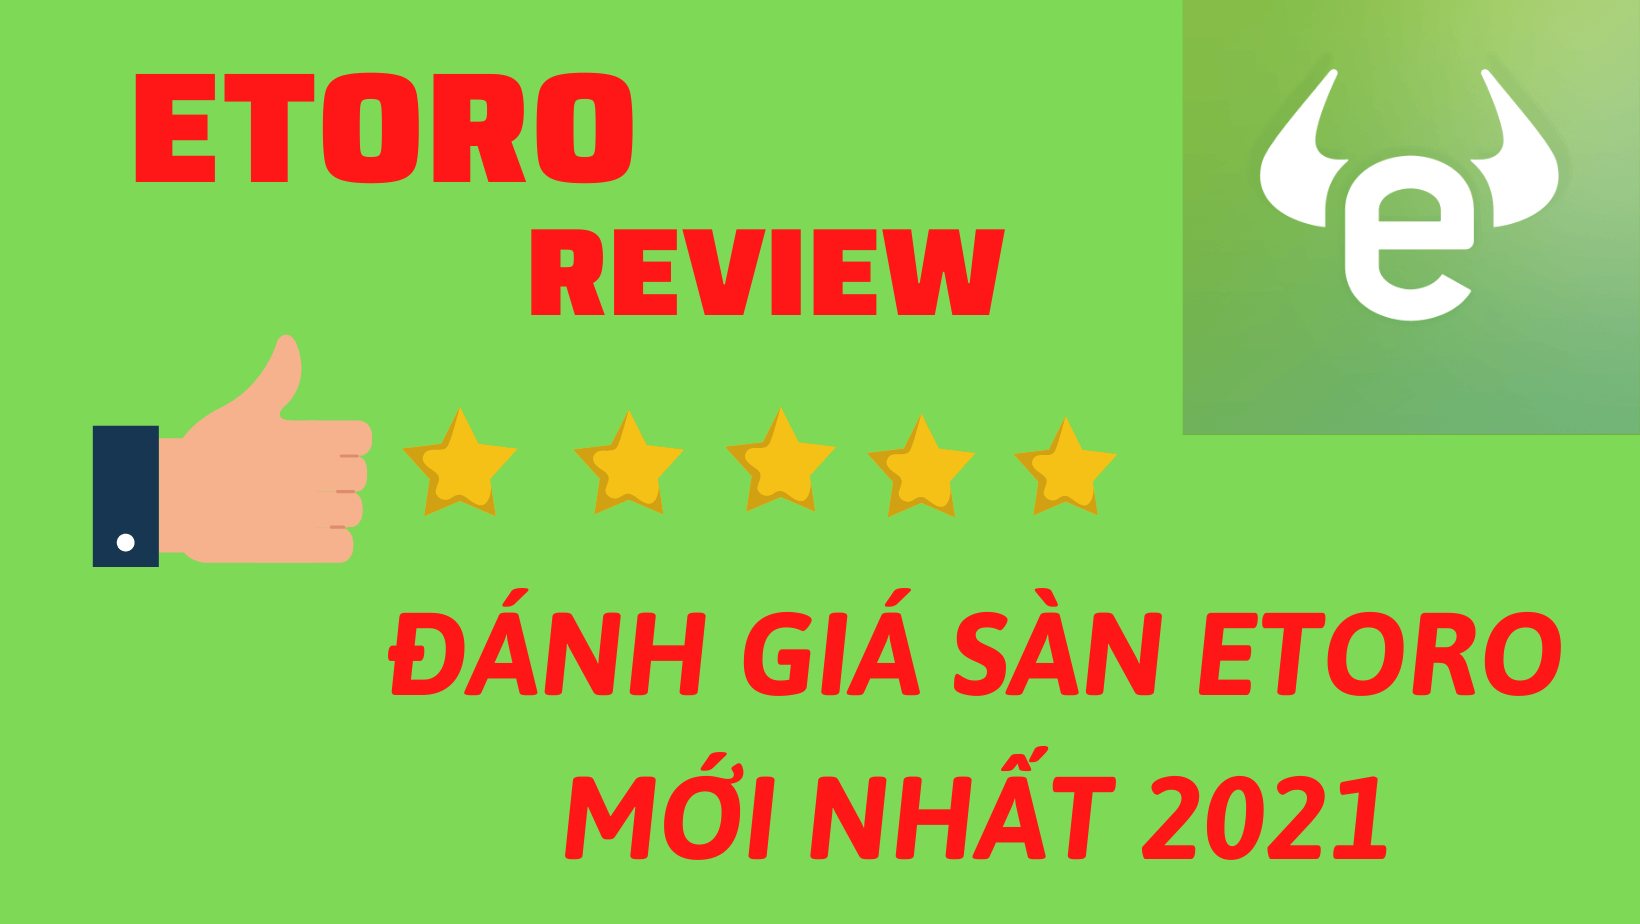 eToro review - Đnh gi sàn eToro 2021 - Forex15phut.com